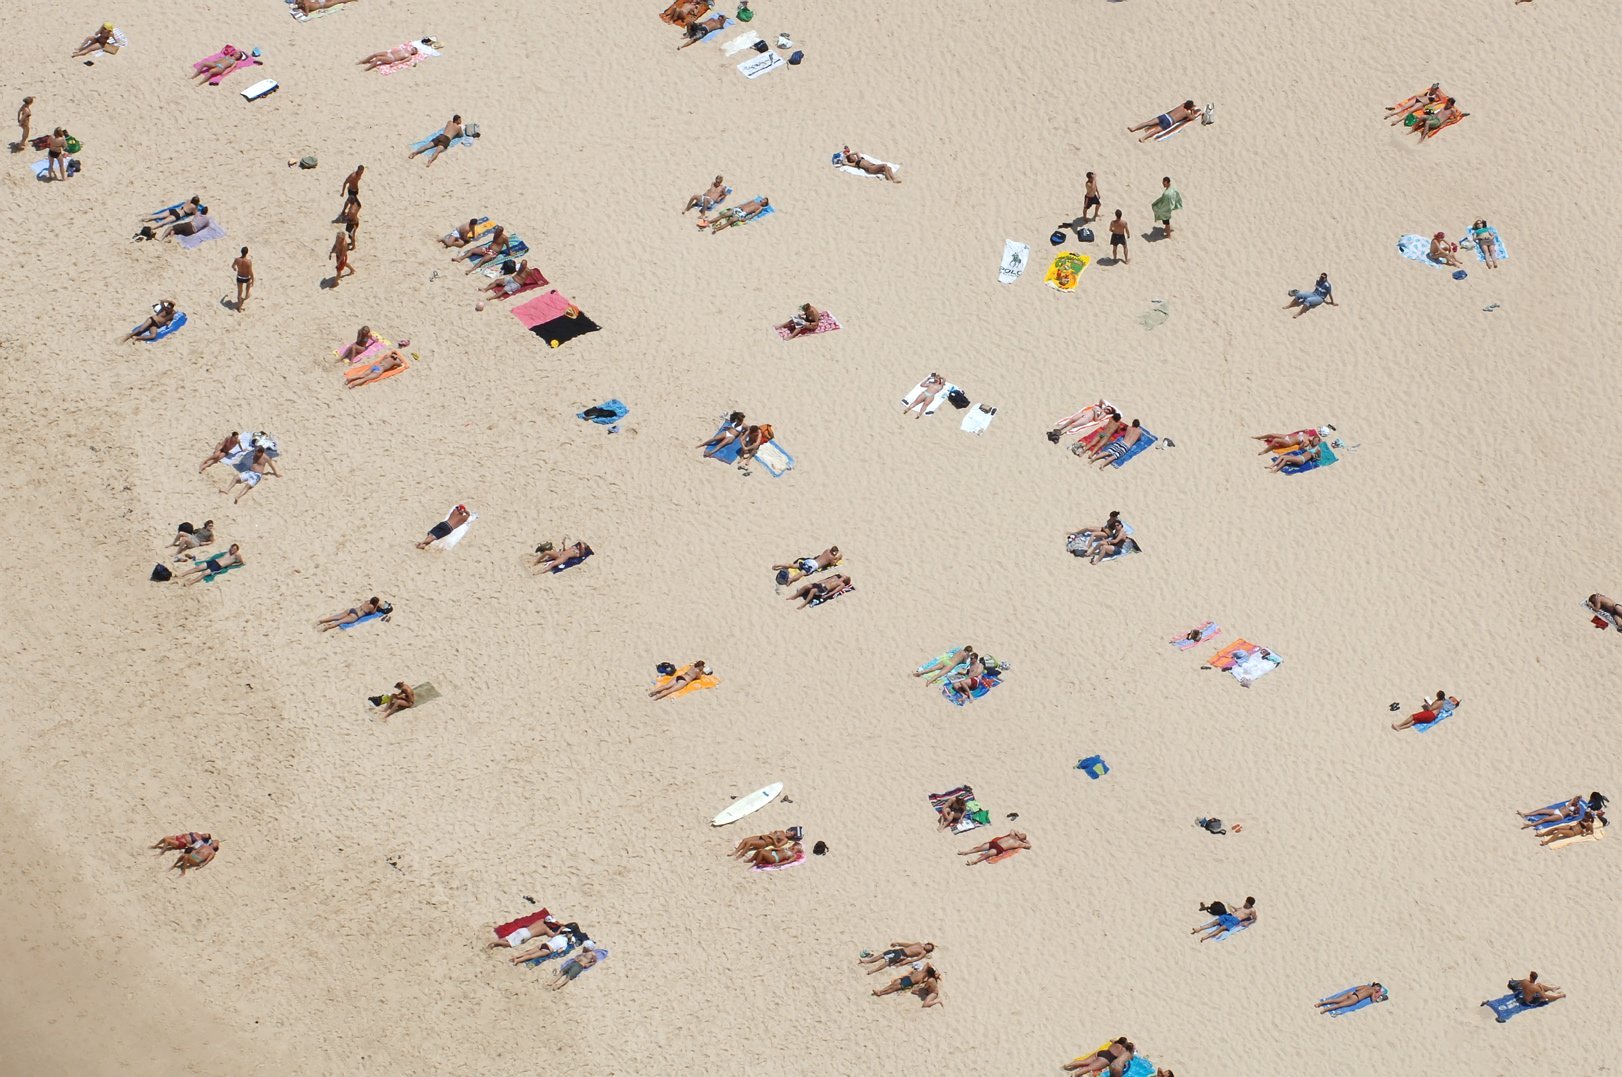 An aerial looking over people relaxing on Bondi Beach, Australia, Dec. 17, 2005.